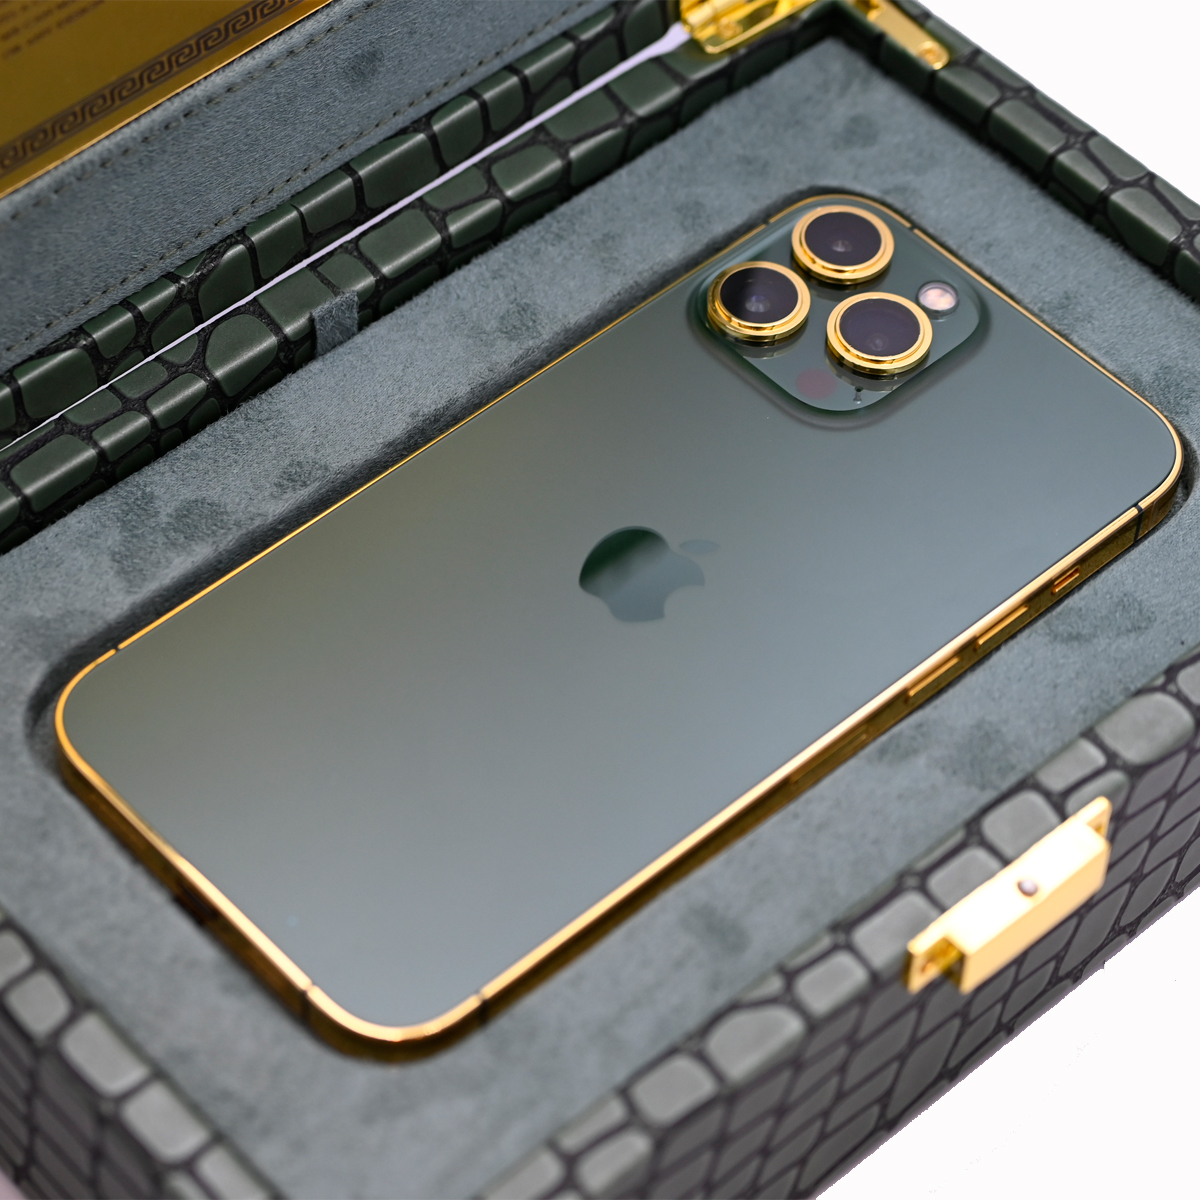 Caviar Luxury Customized 24k Gold Frame iPhone 13 Pro - Midnight Green 256 GB